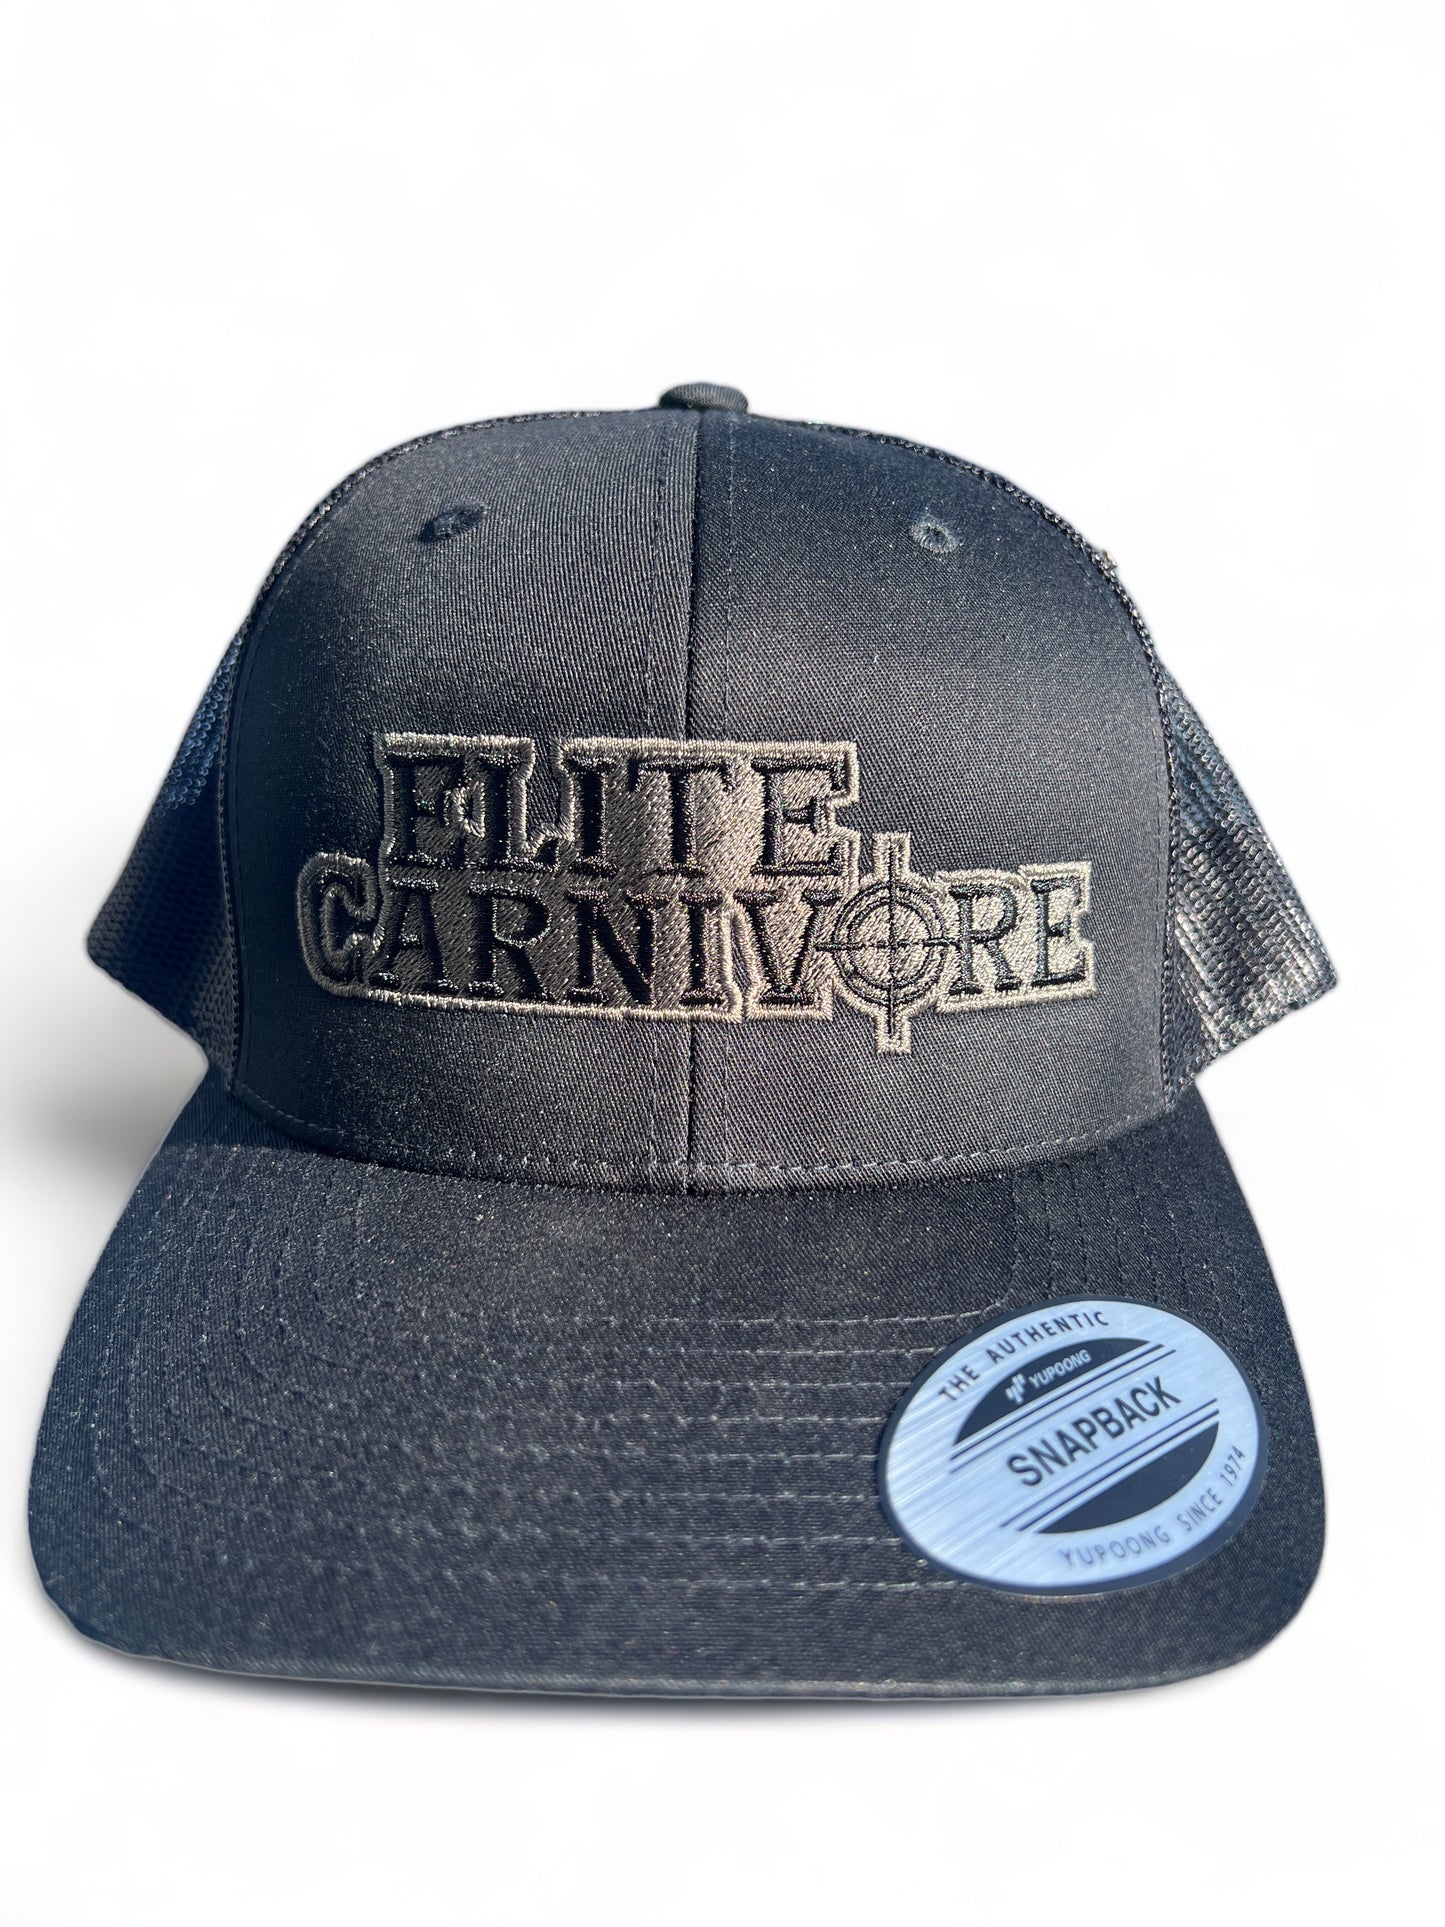 Elite Carnivore logo Trucker hat